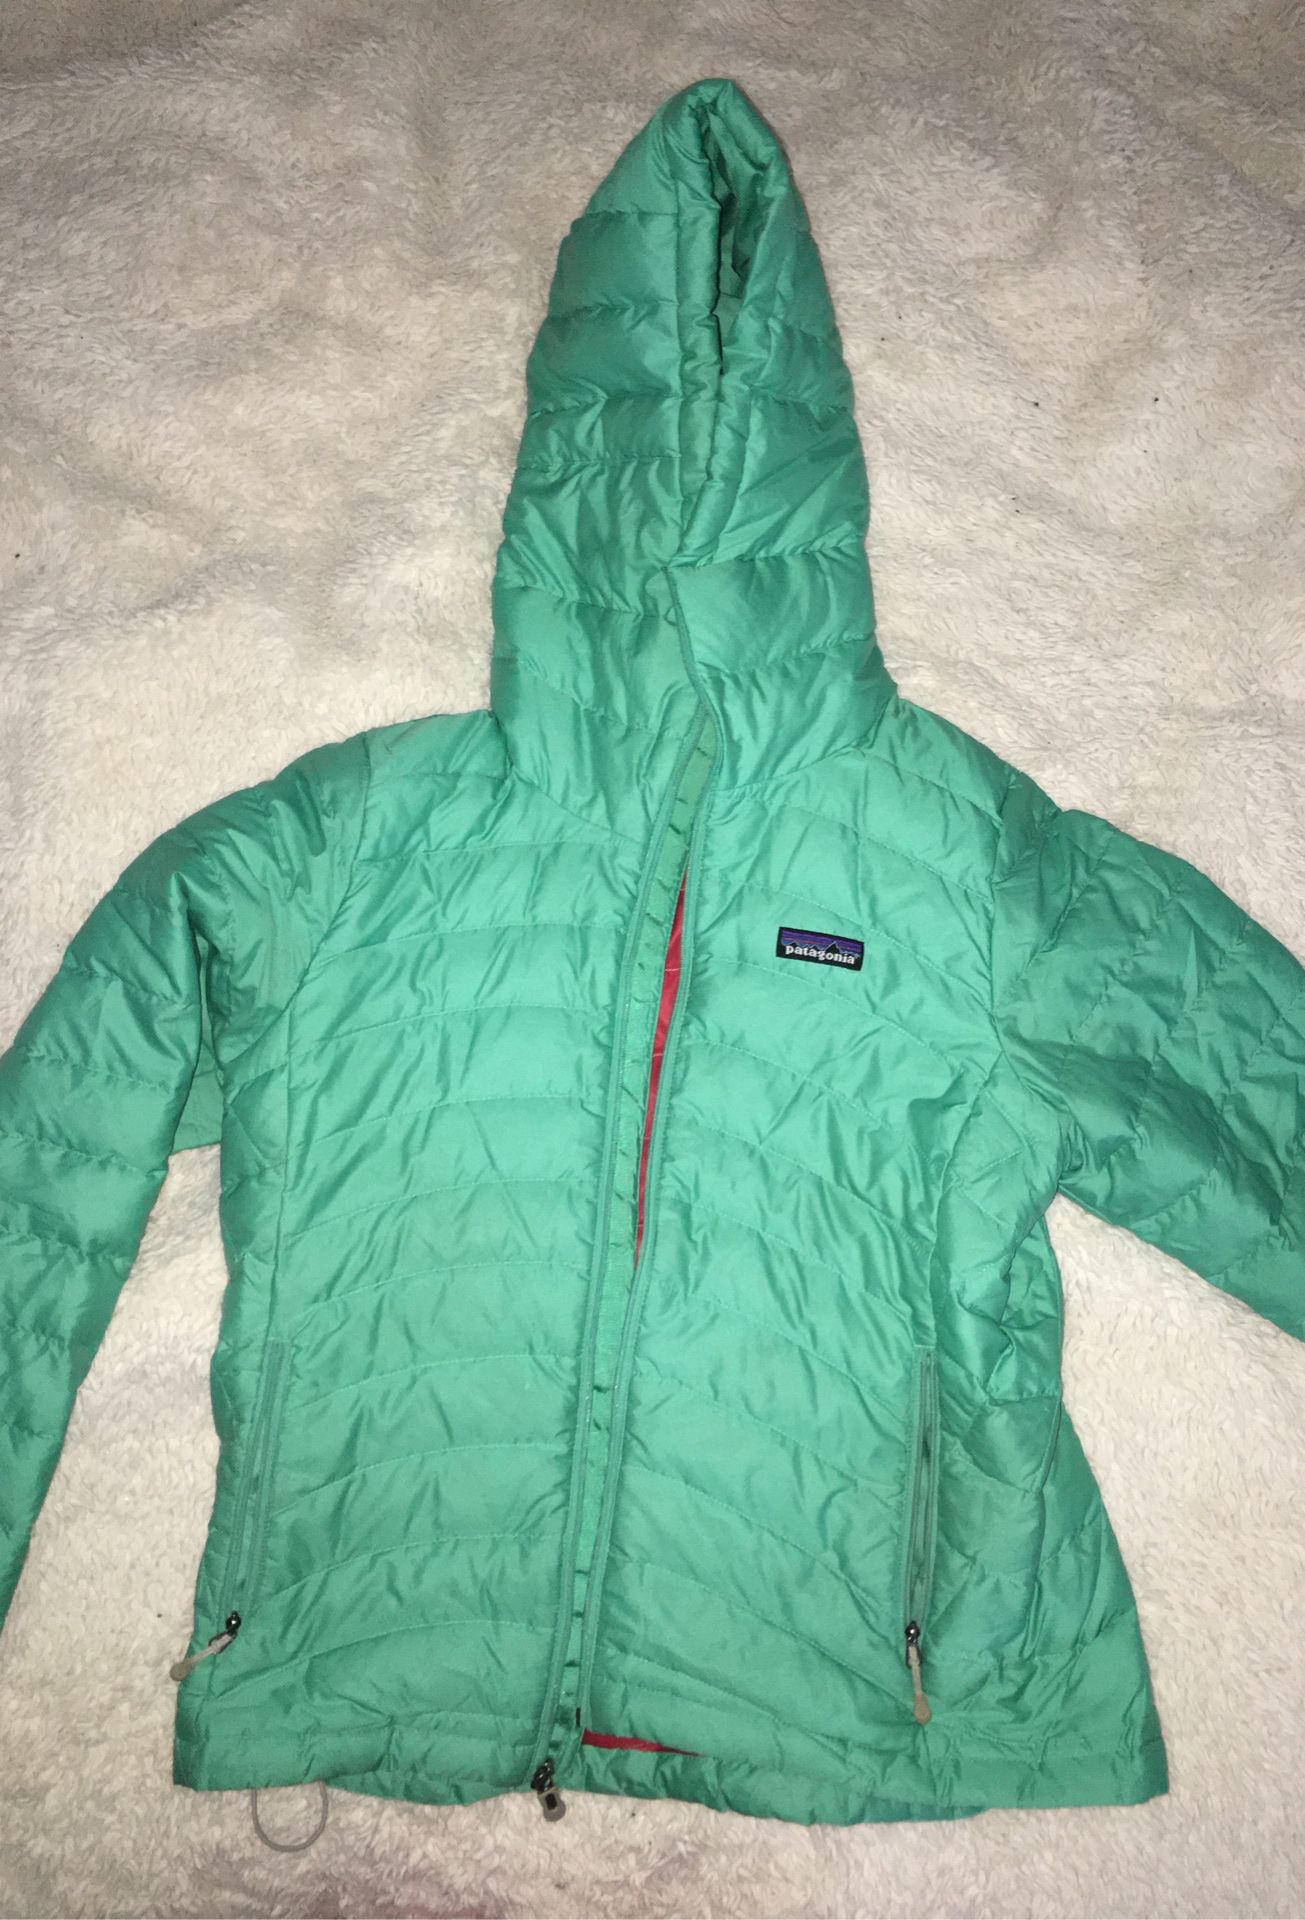 Patagonia Women’s Jacket (Small)